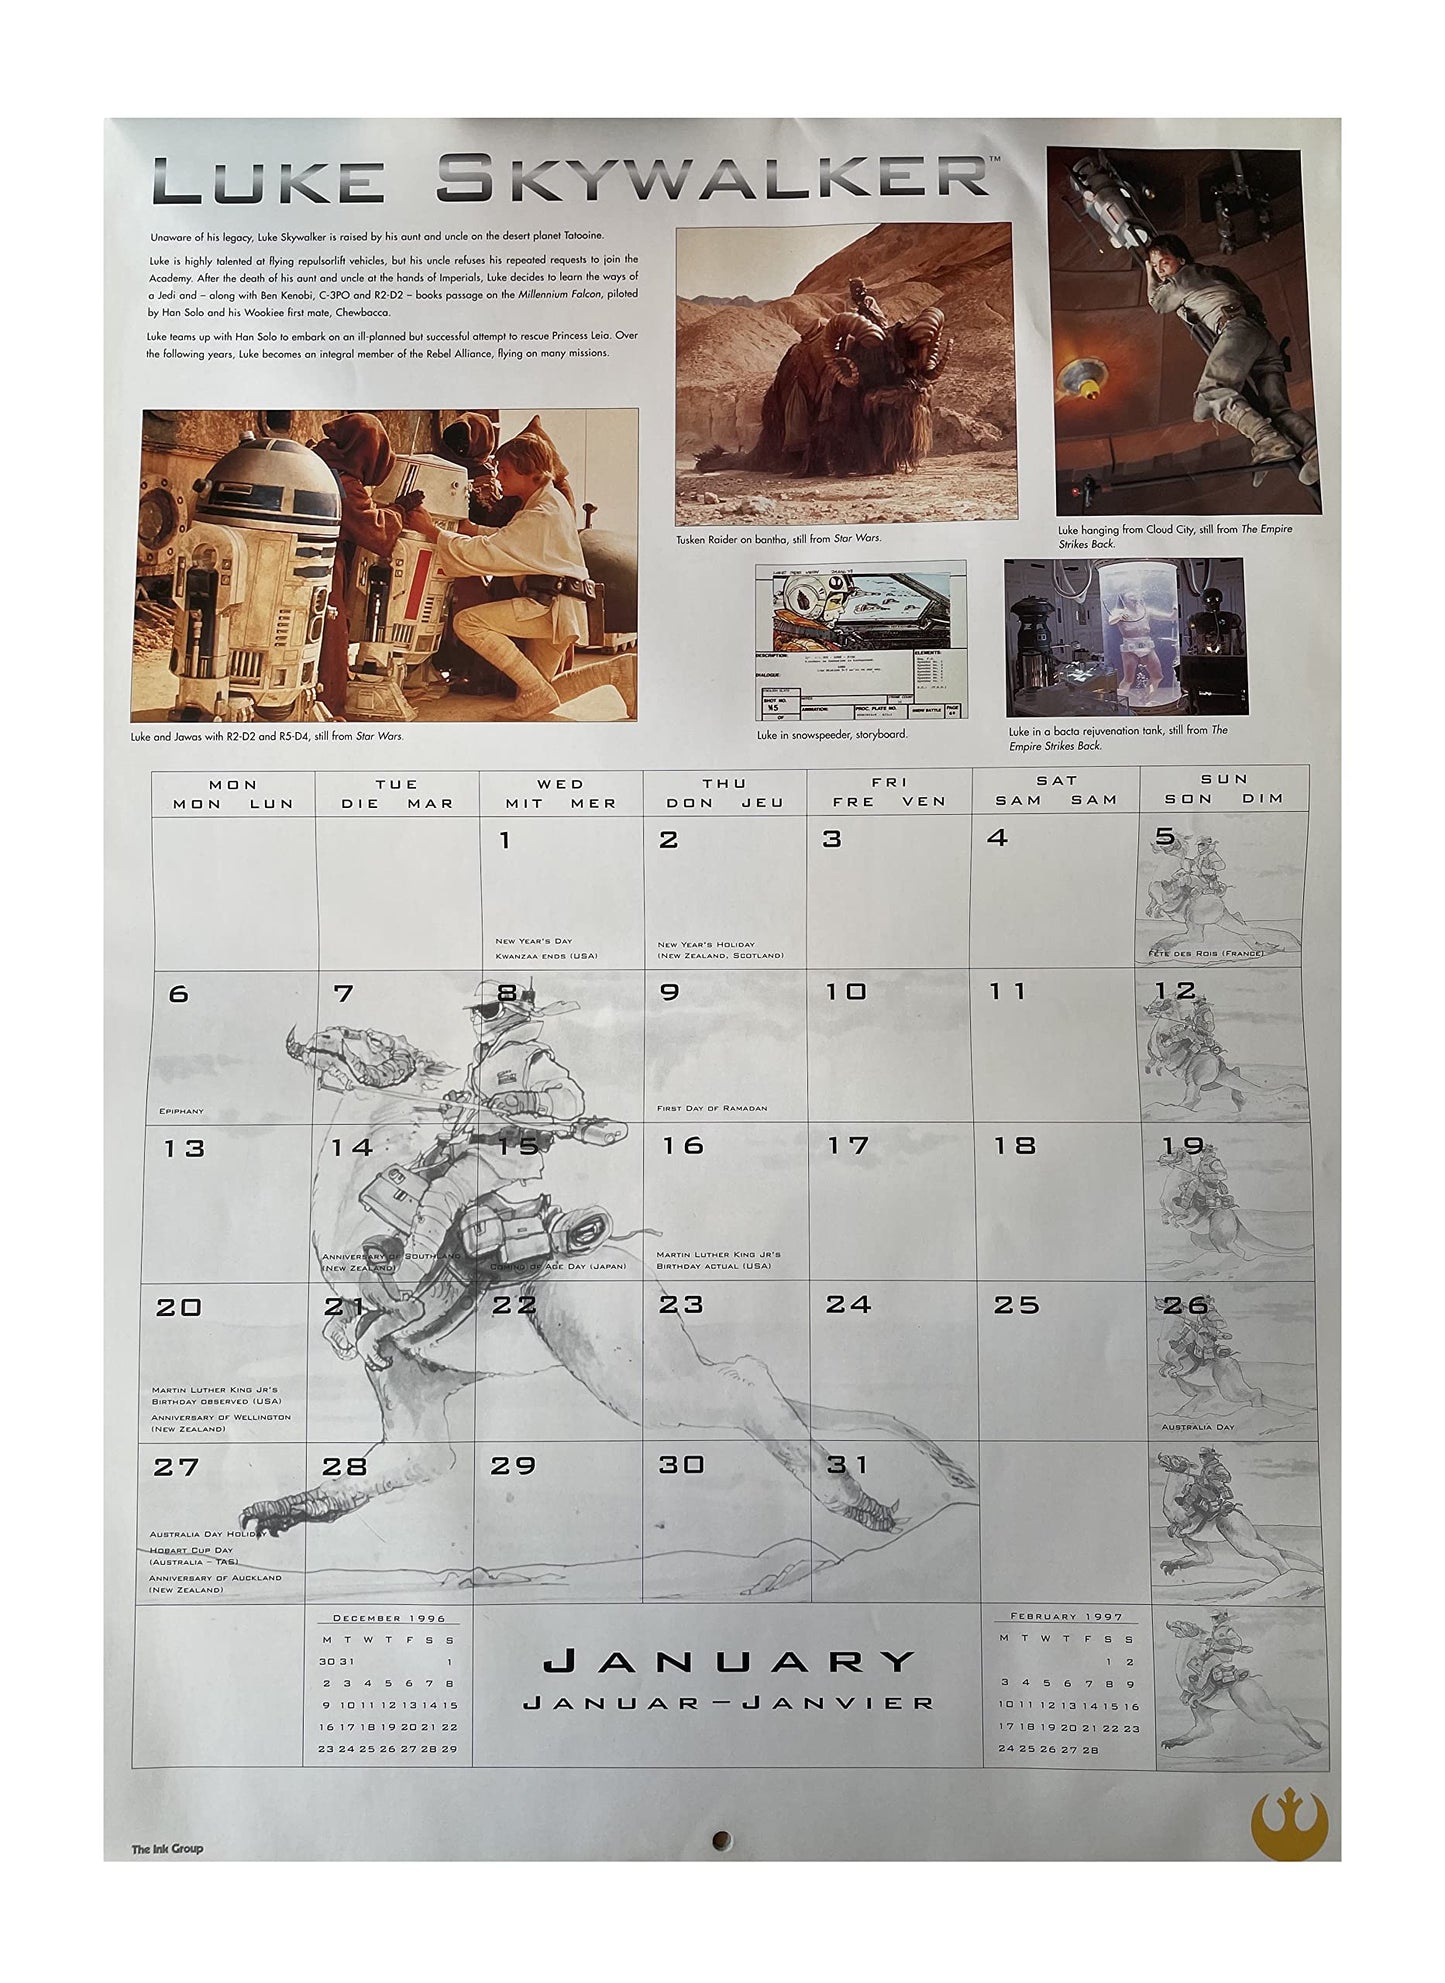 Vintage Star Wars 20th Anniversary 1997 Calendar Collectors Edition